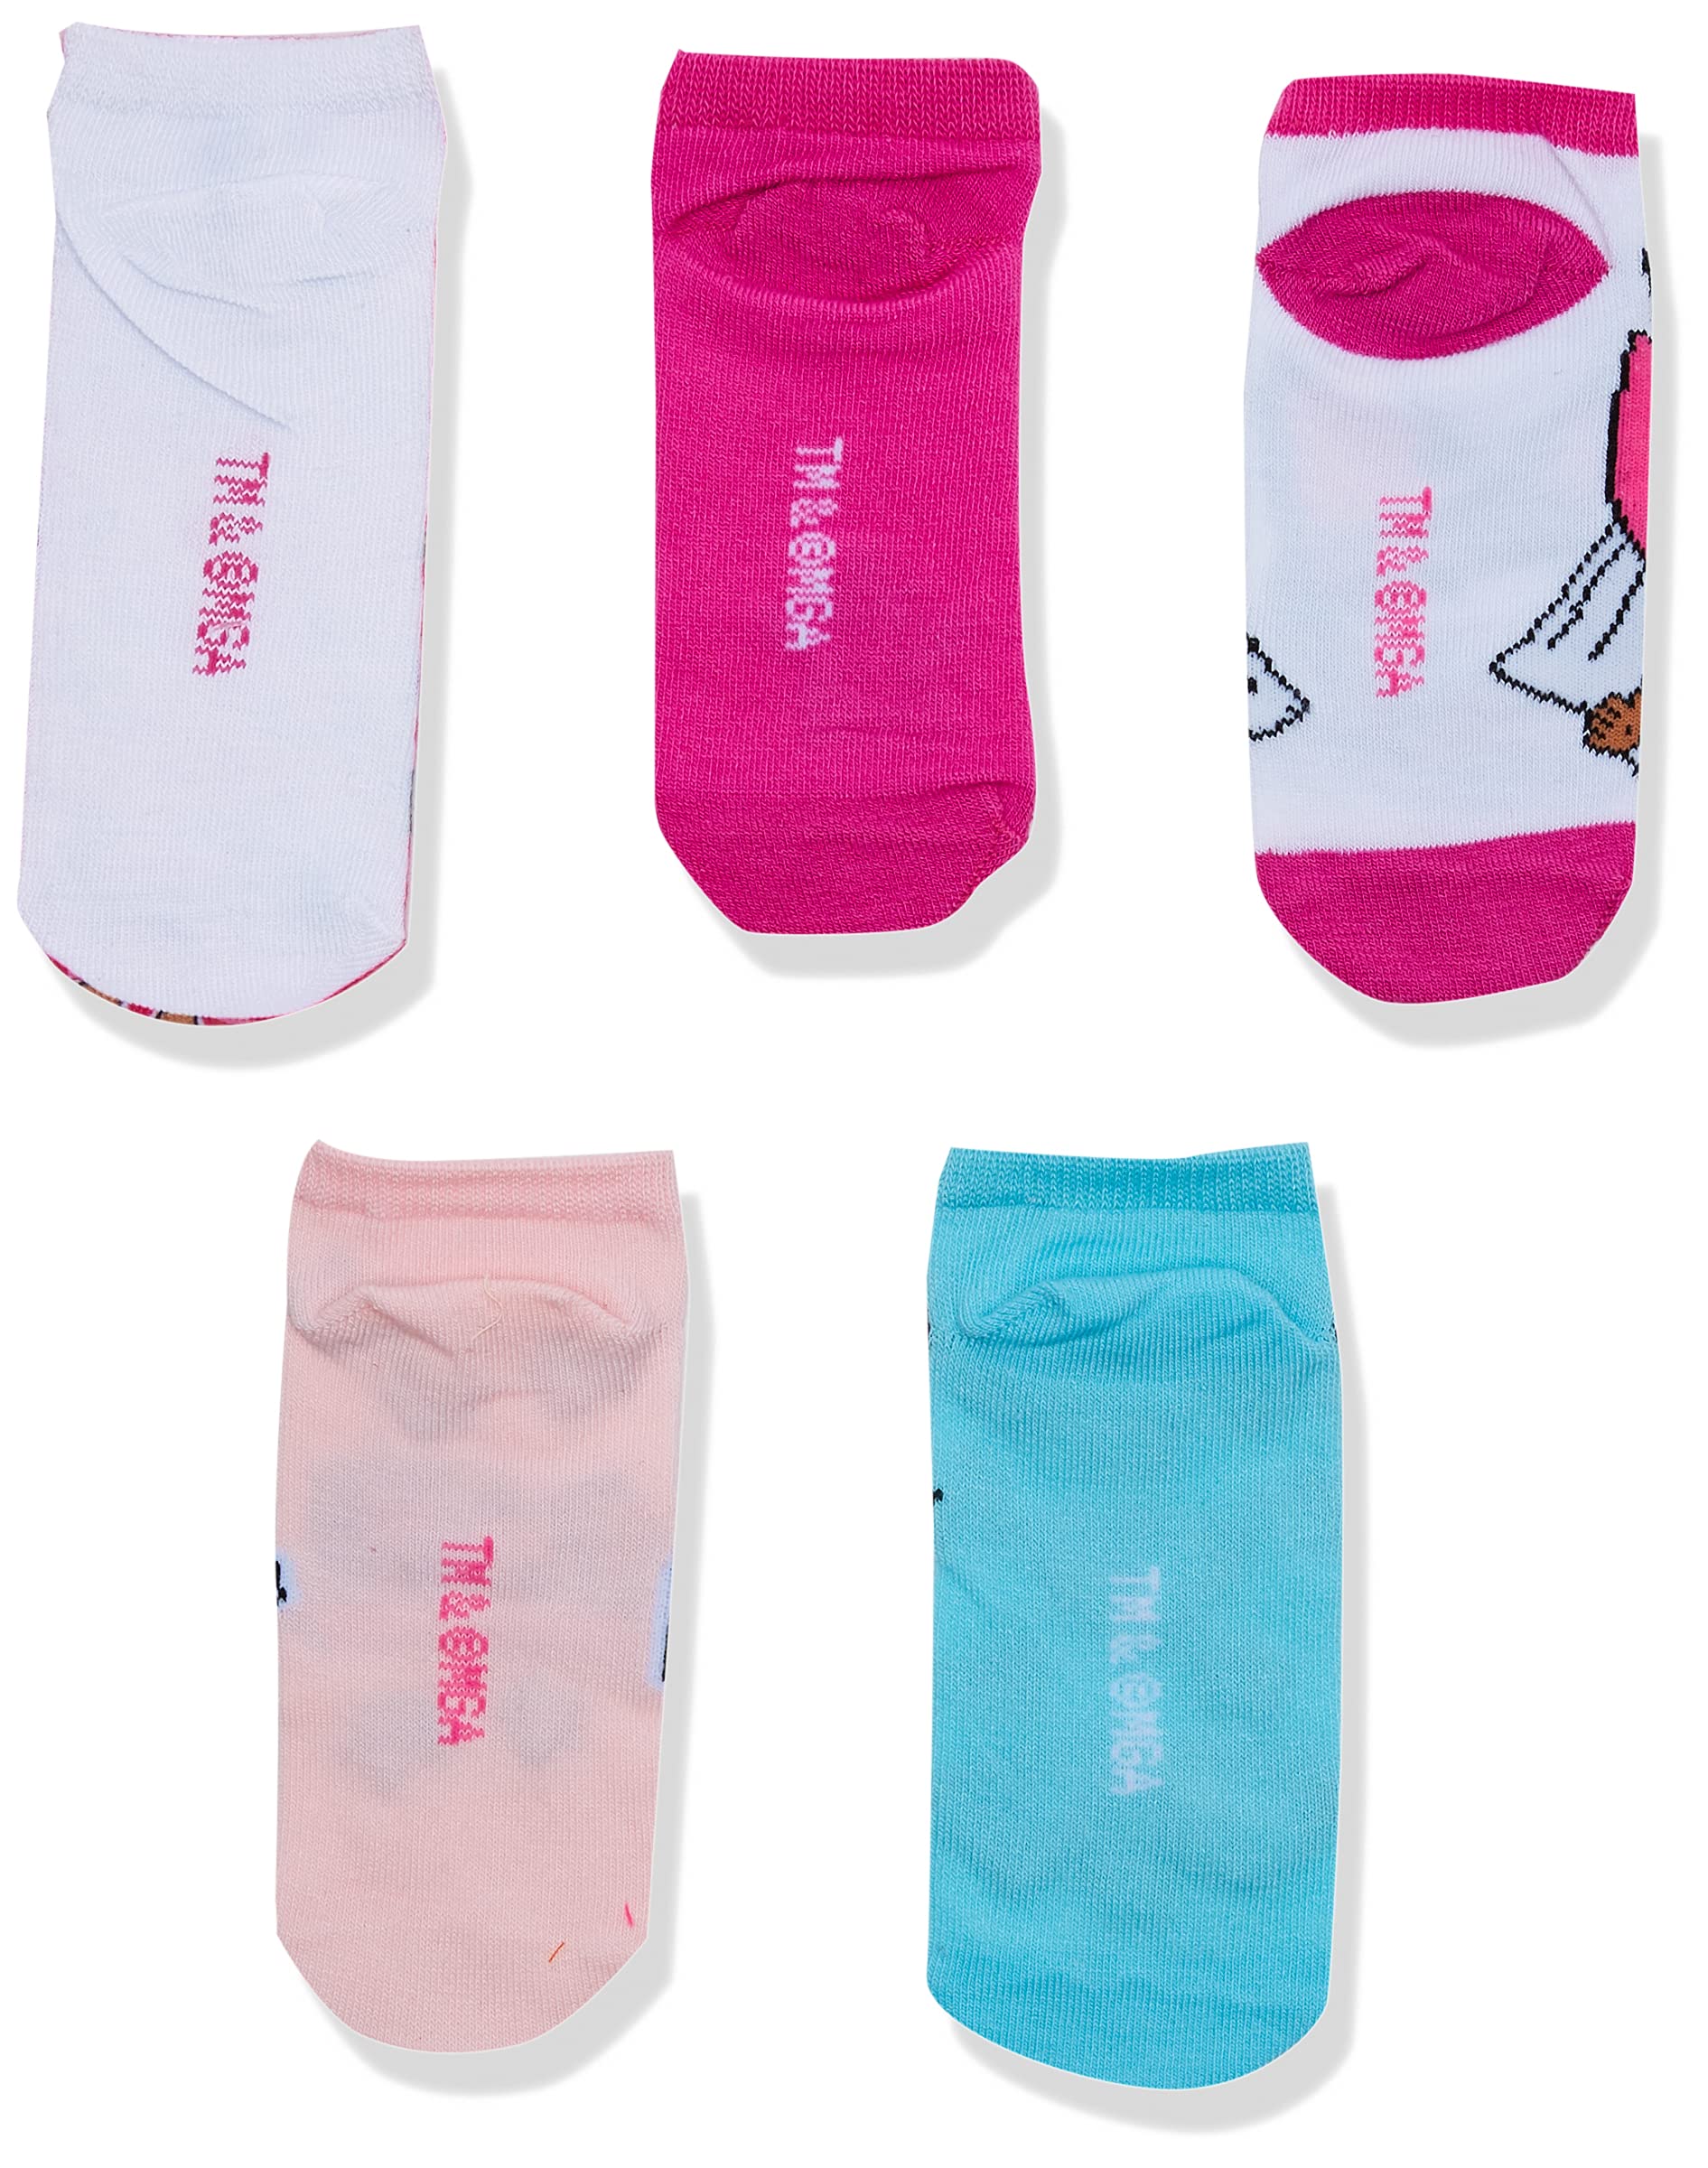 L.O.L. Surprise! girls Lol Surprise! 5 Pack Shorty Socks, Assorted Pink, Shoe Size 3-8 US